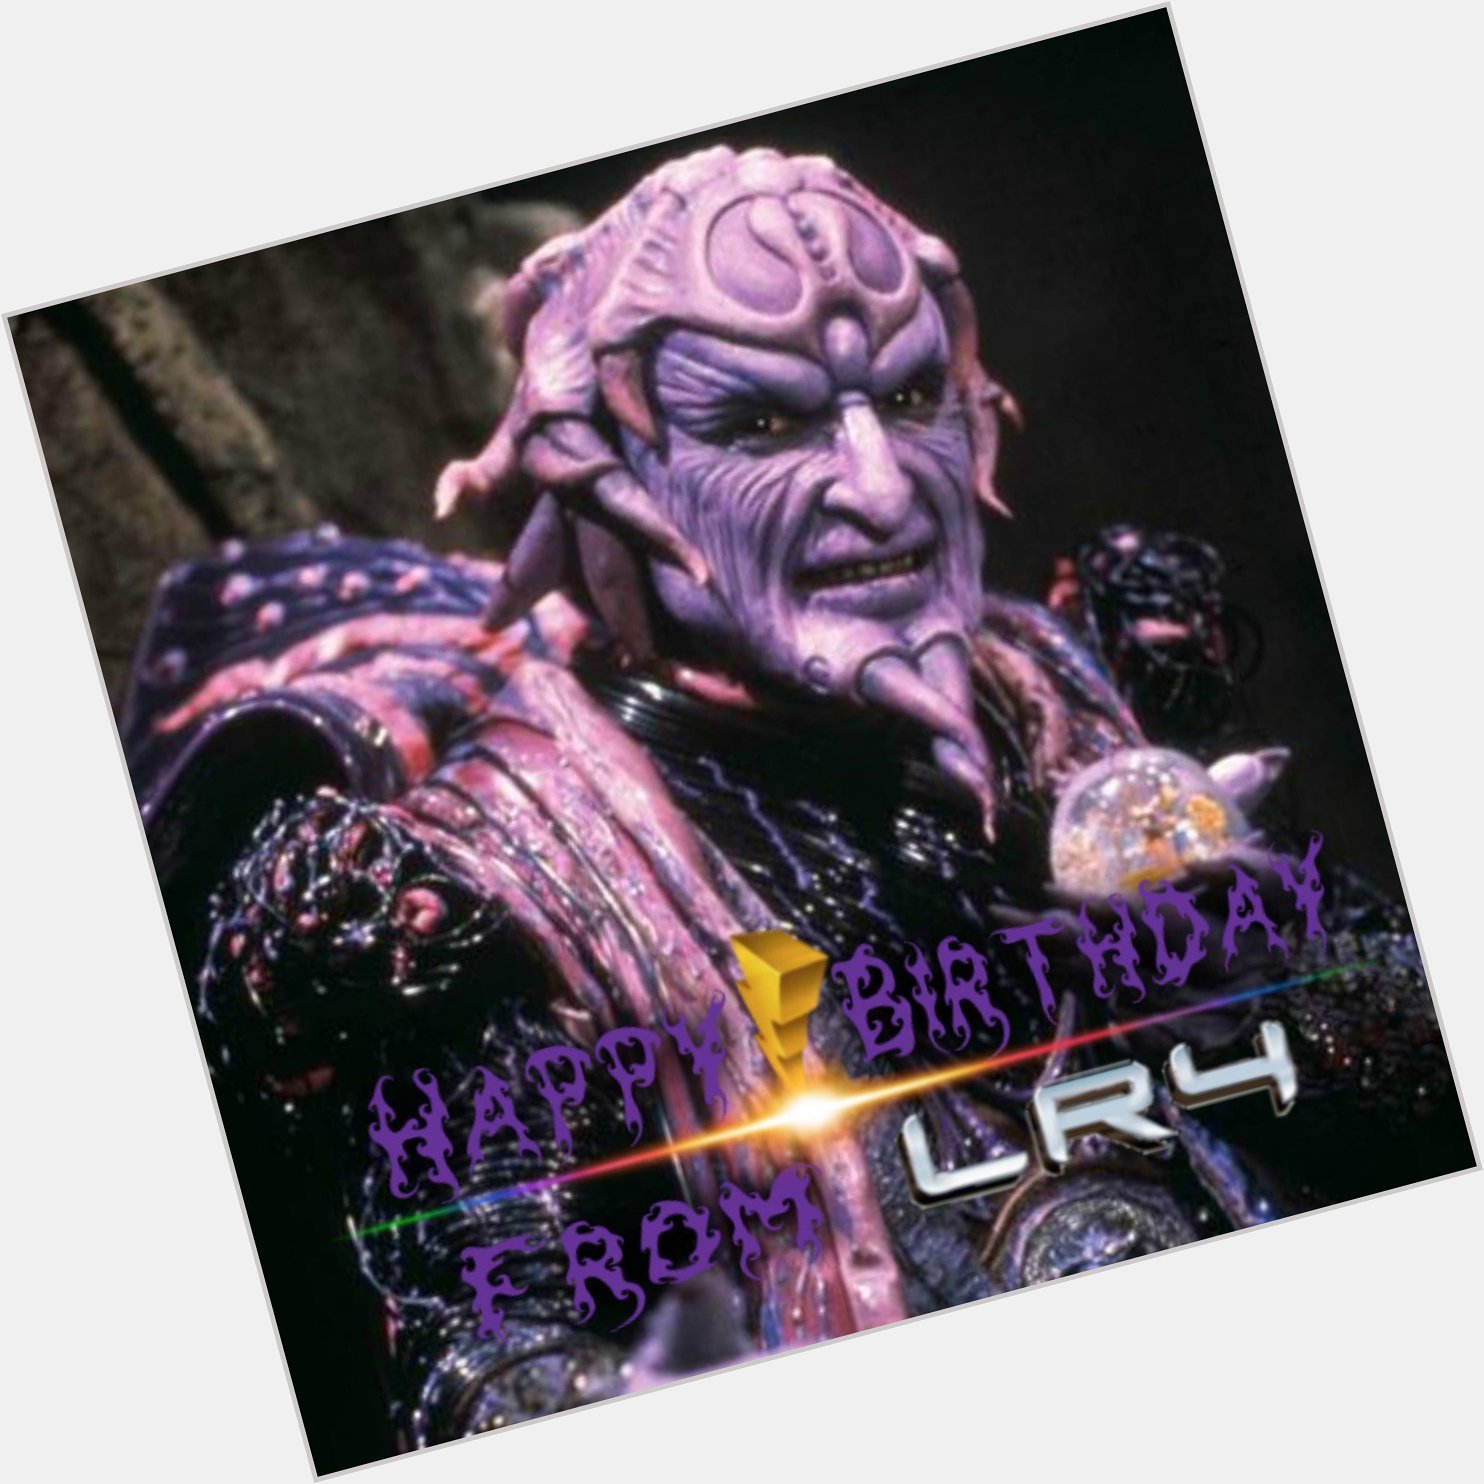 LR4 would like to wish Paul Freeman a Happy Birthday! 